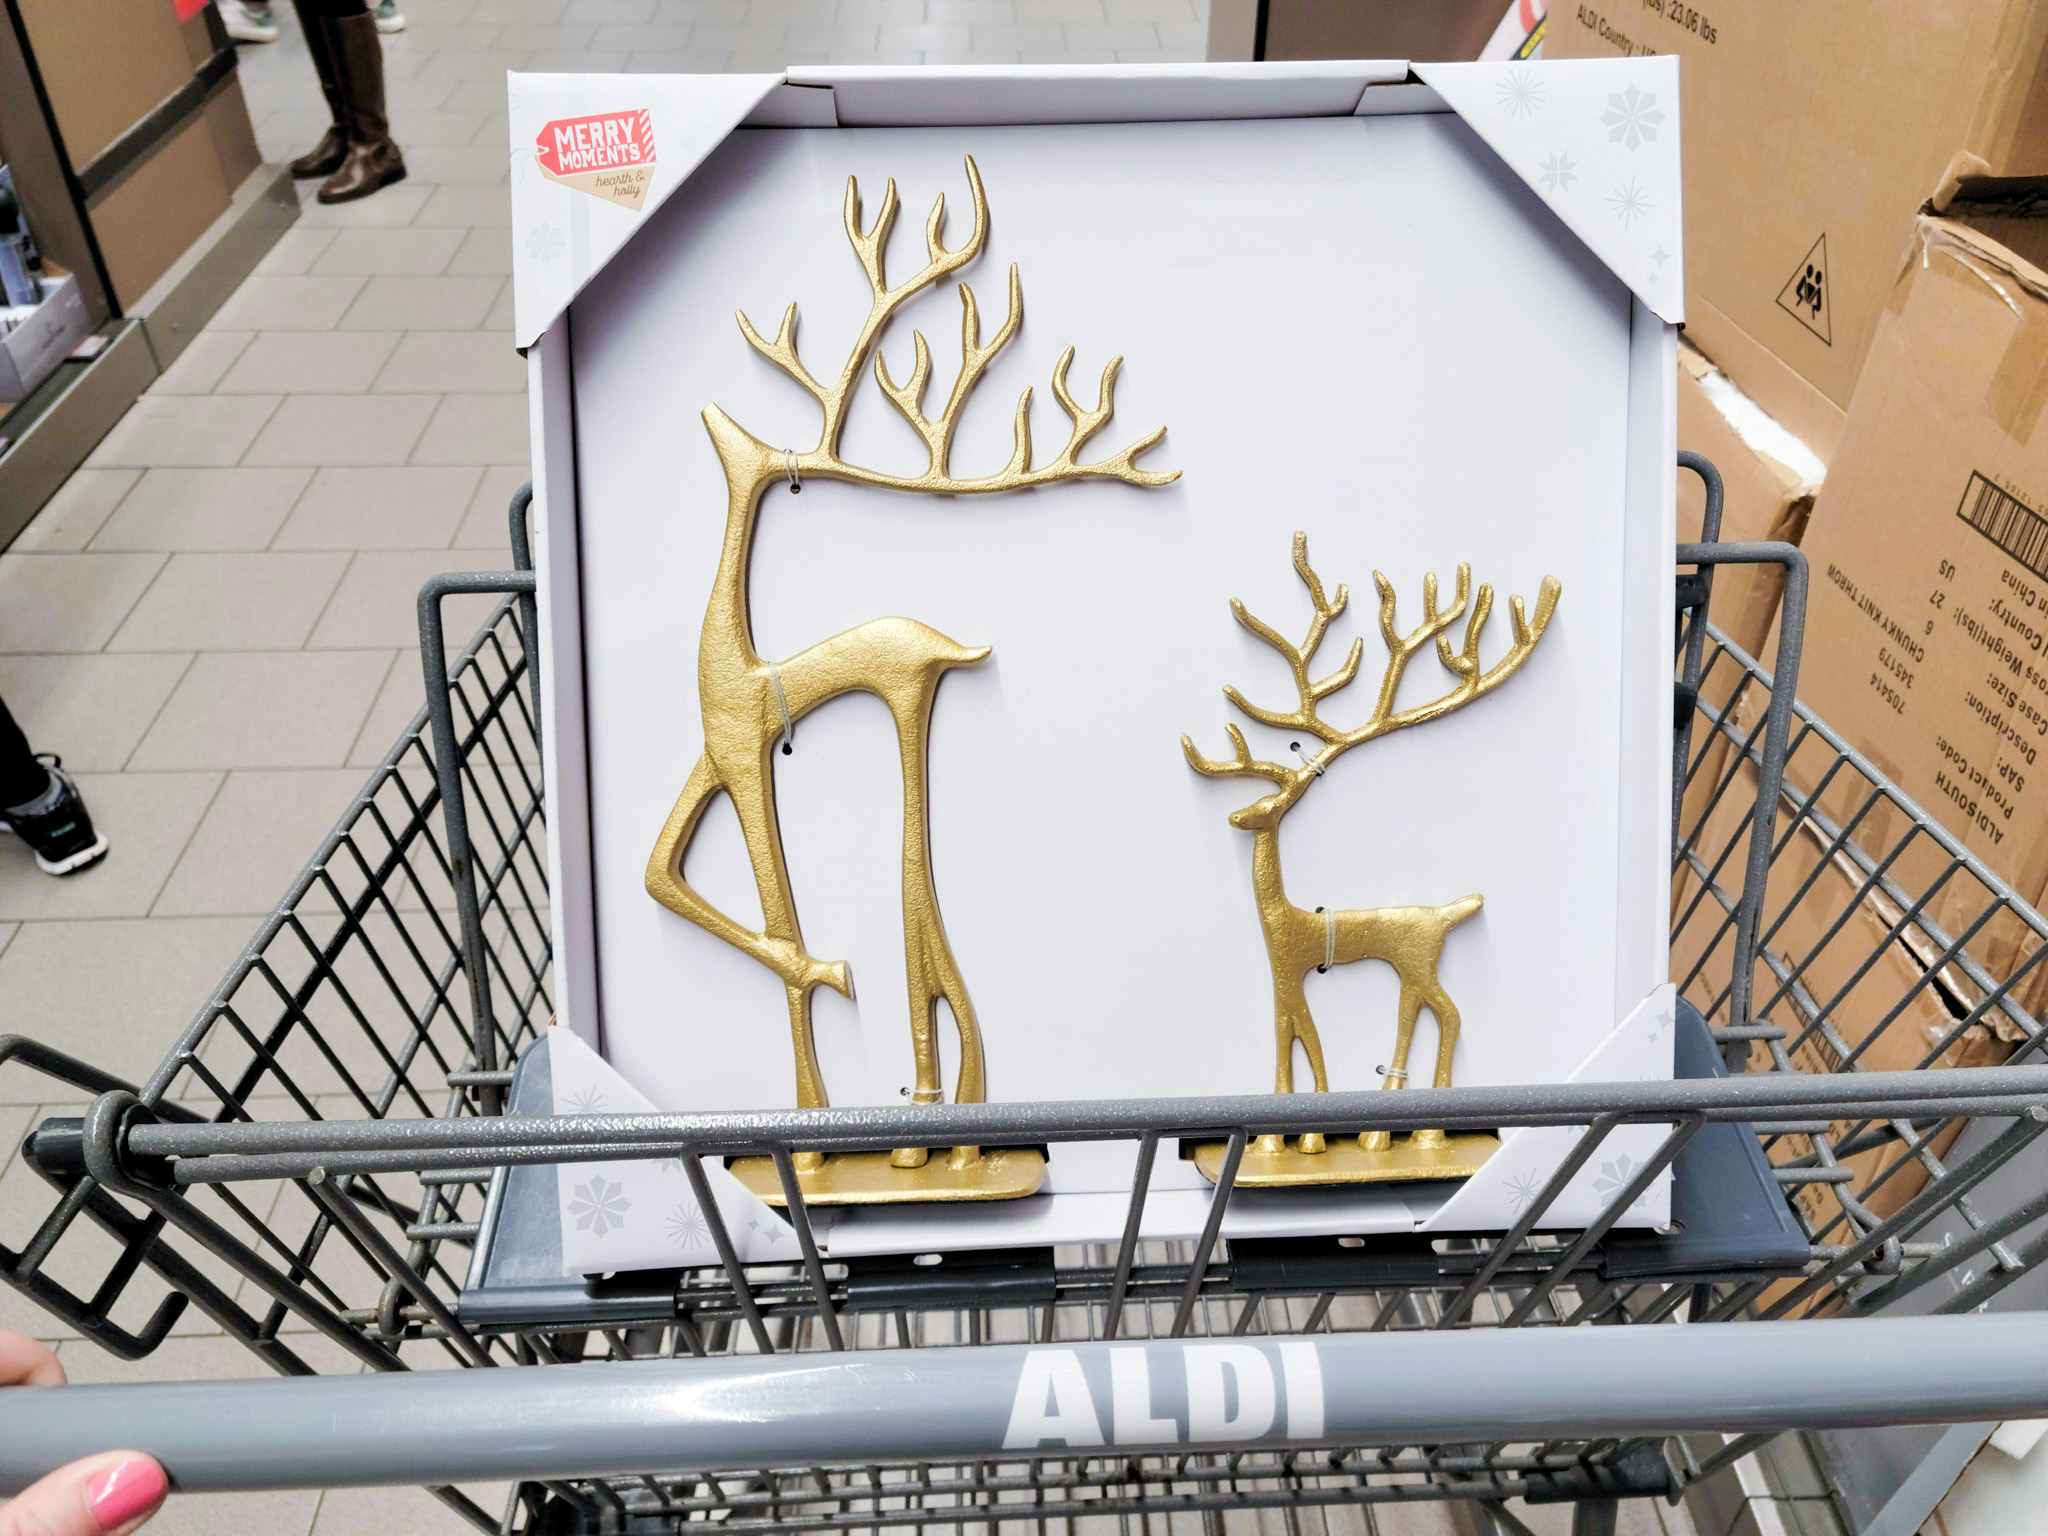 Christmas reindeer decor in an aldi cart 